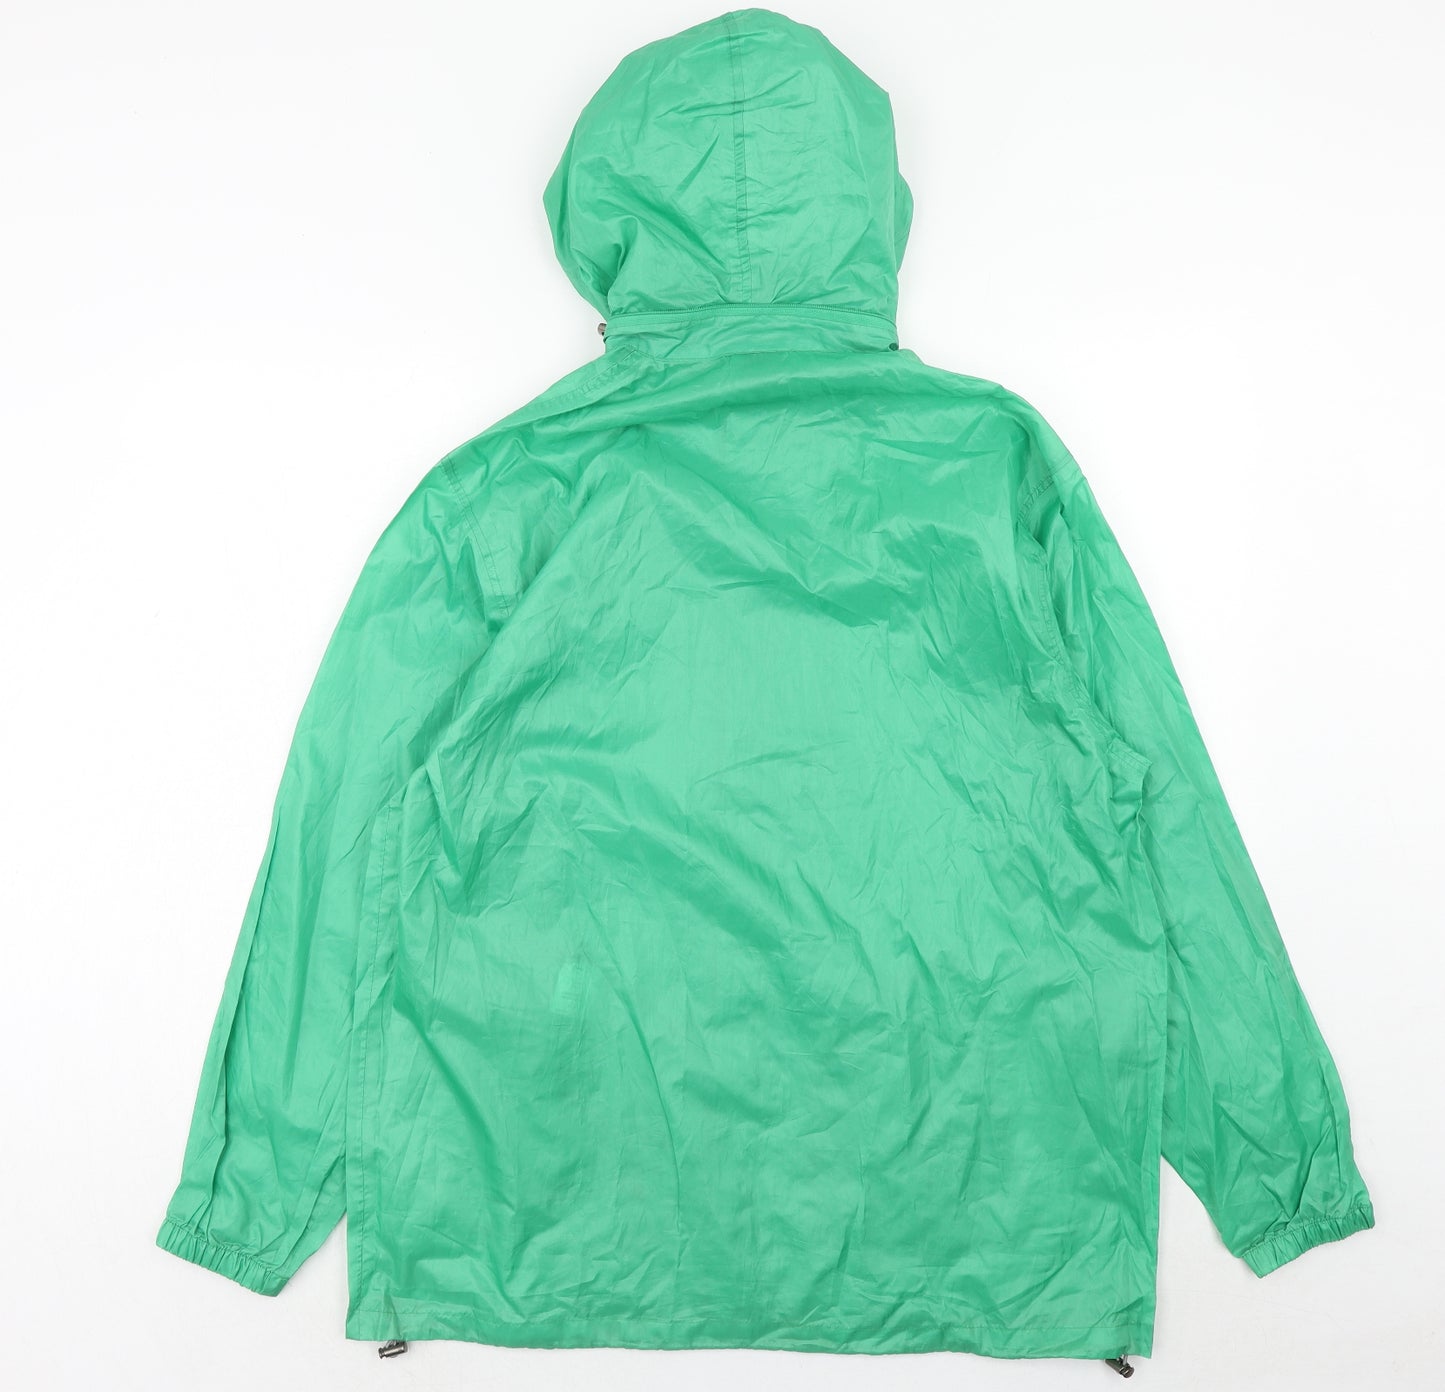 Cotton Traders Mens Green Rain Coat Coat Size M Zip